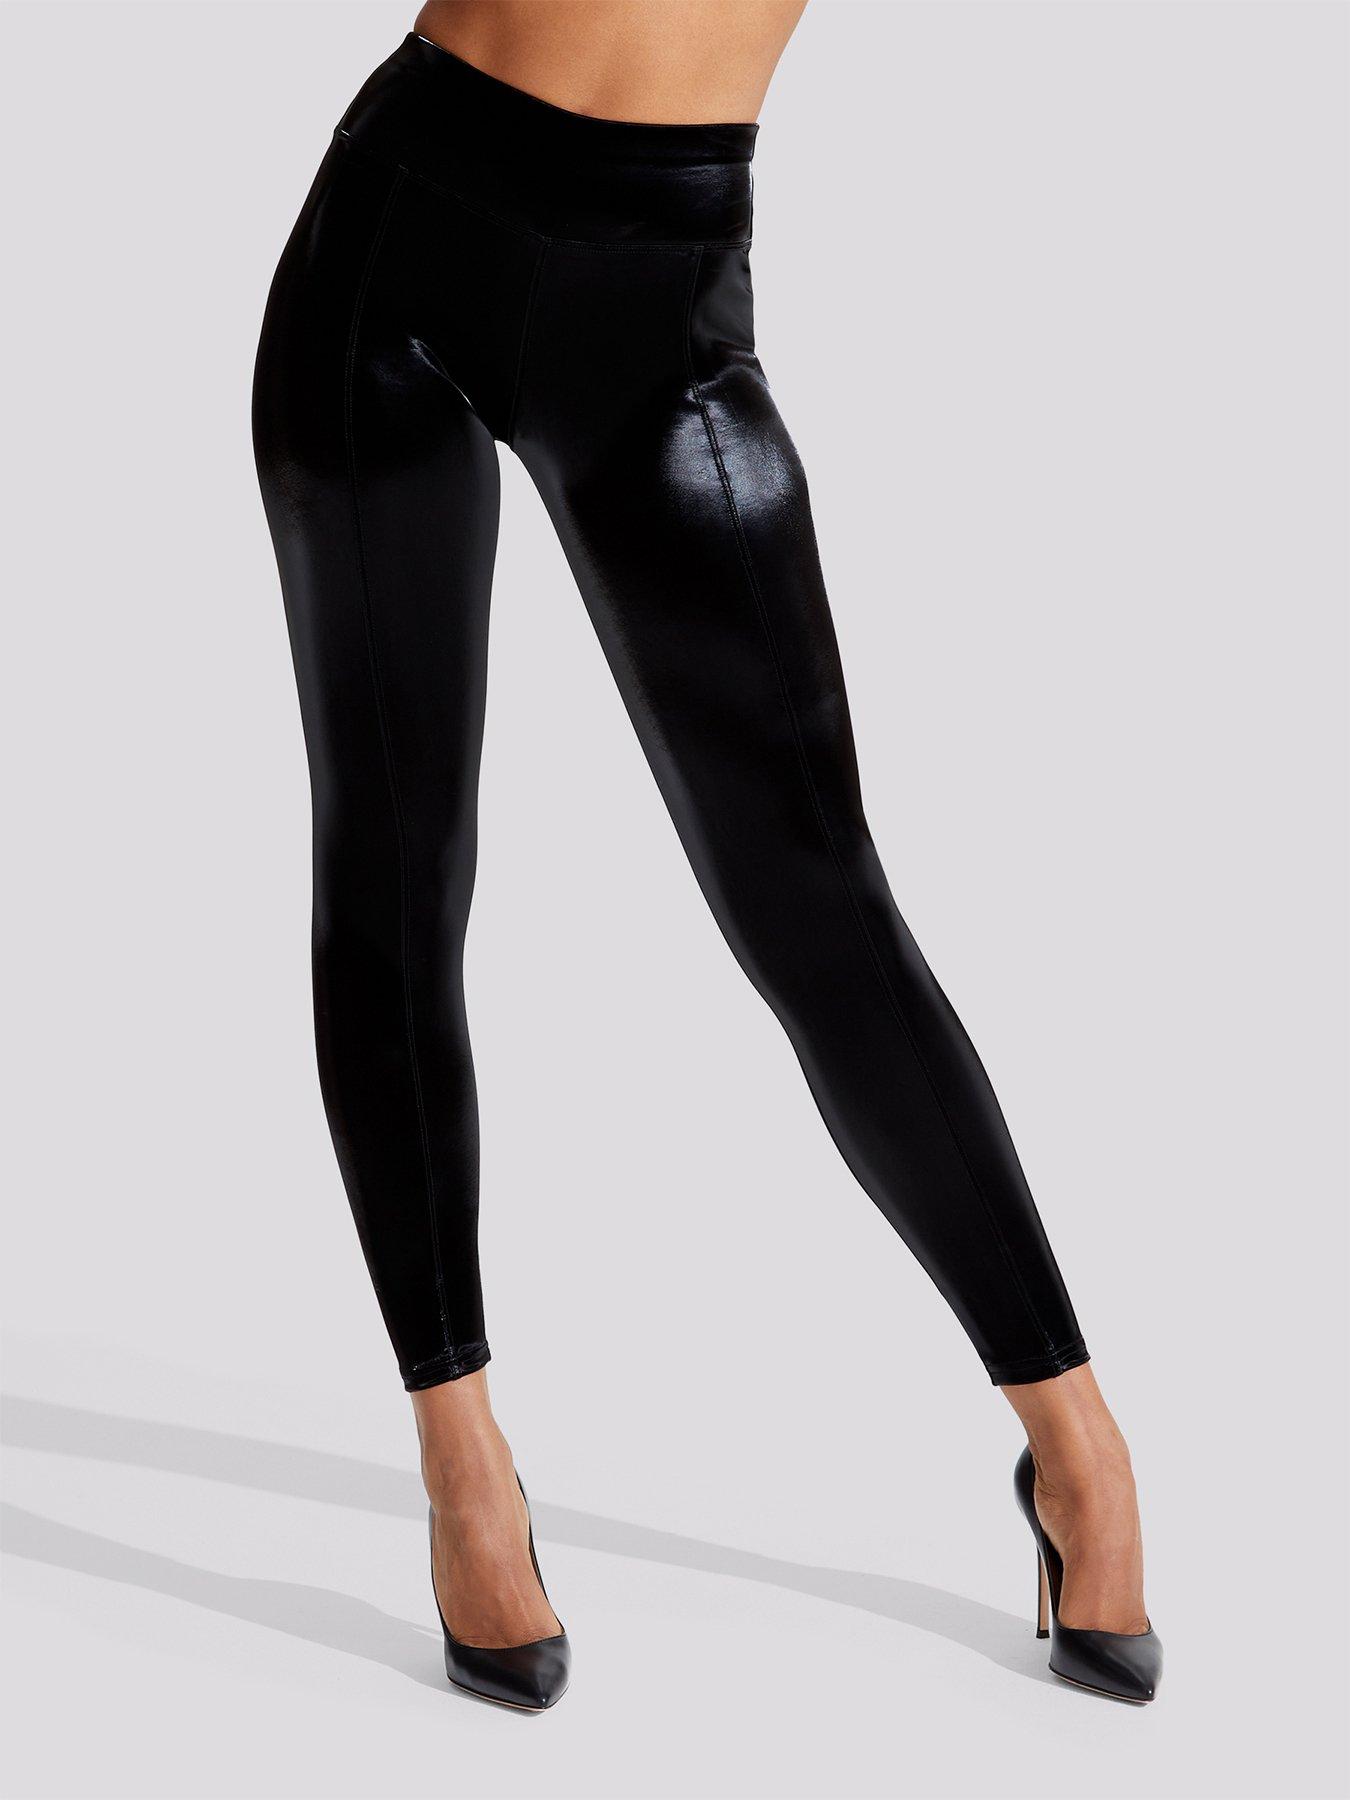 https://media.very.co.uk/i/very/VF2H9_SQ1_0000000004_BLACK_MDf/ann-summers-bodywear-apparel-the-high-gloss-pu-legging-black.jpg?$180x240_retinamobilex2$